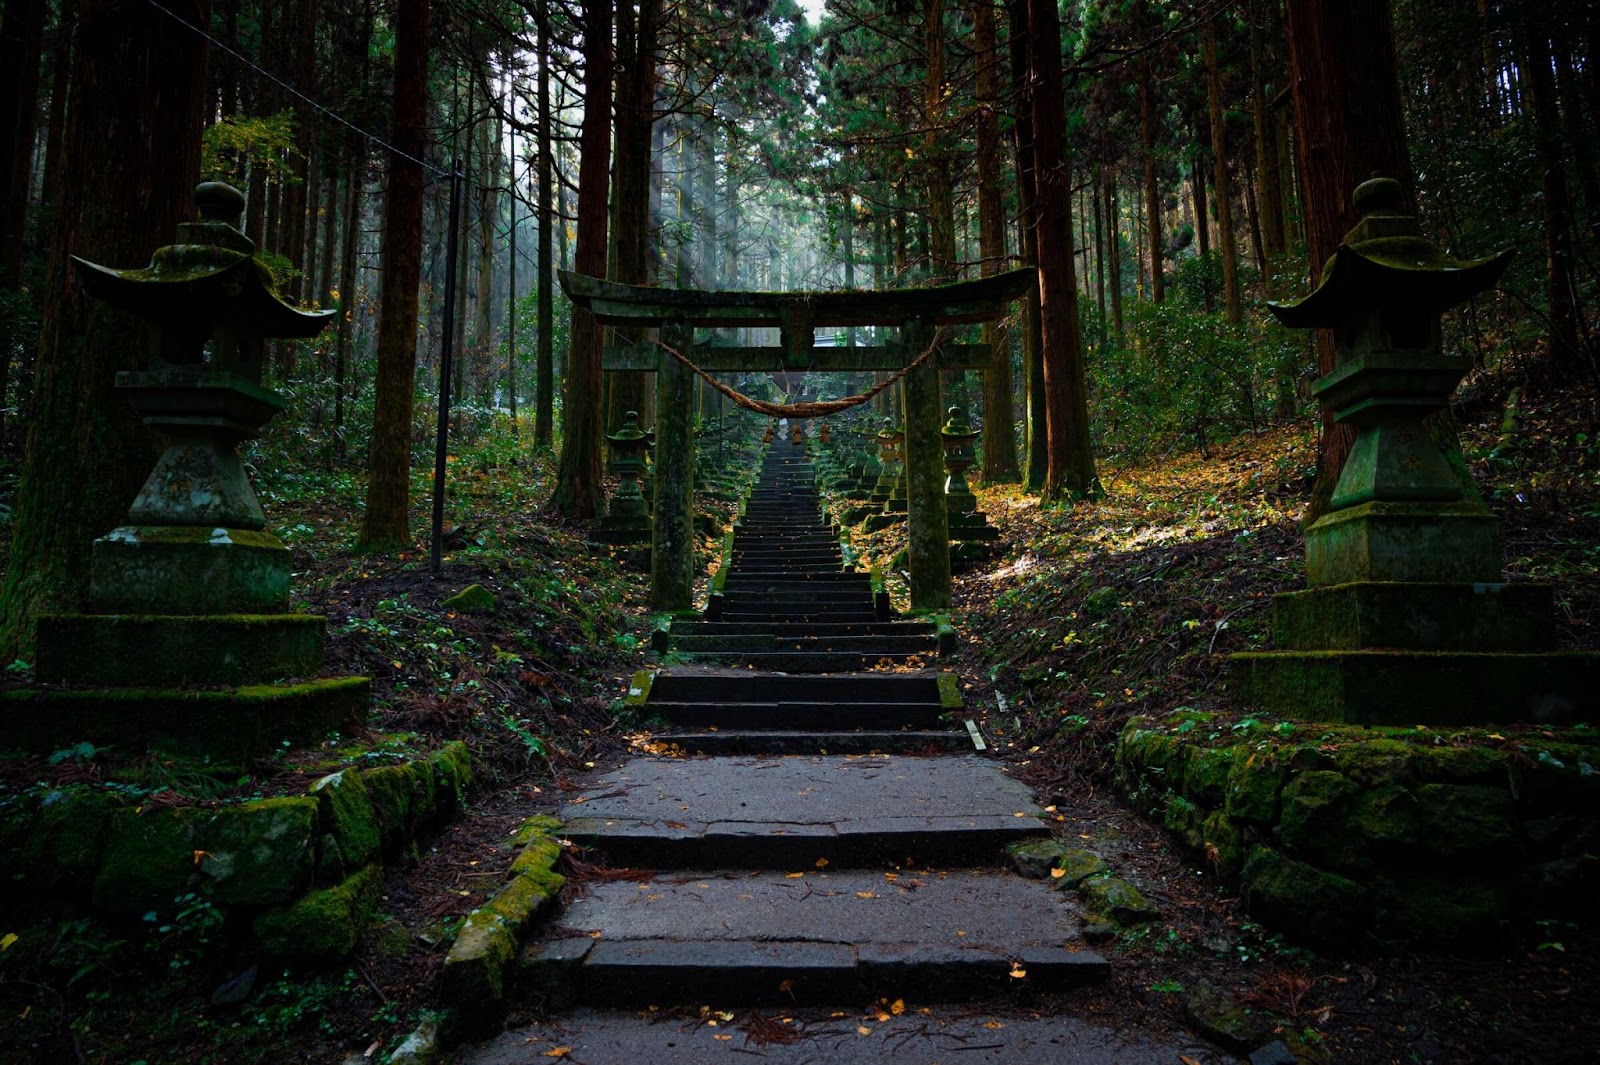 Shiratani Unsuikyo Forest, Princess Mononoke Forest, Yakushima Island